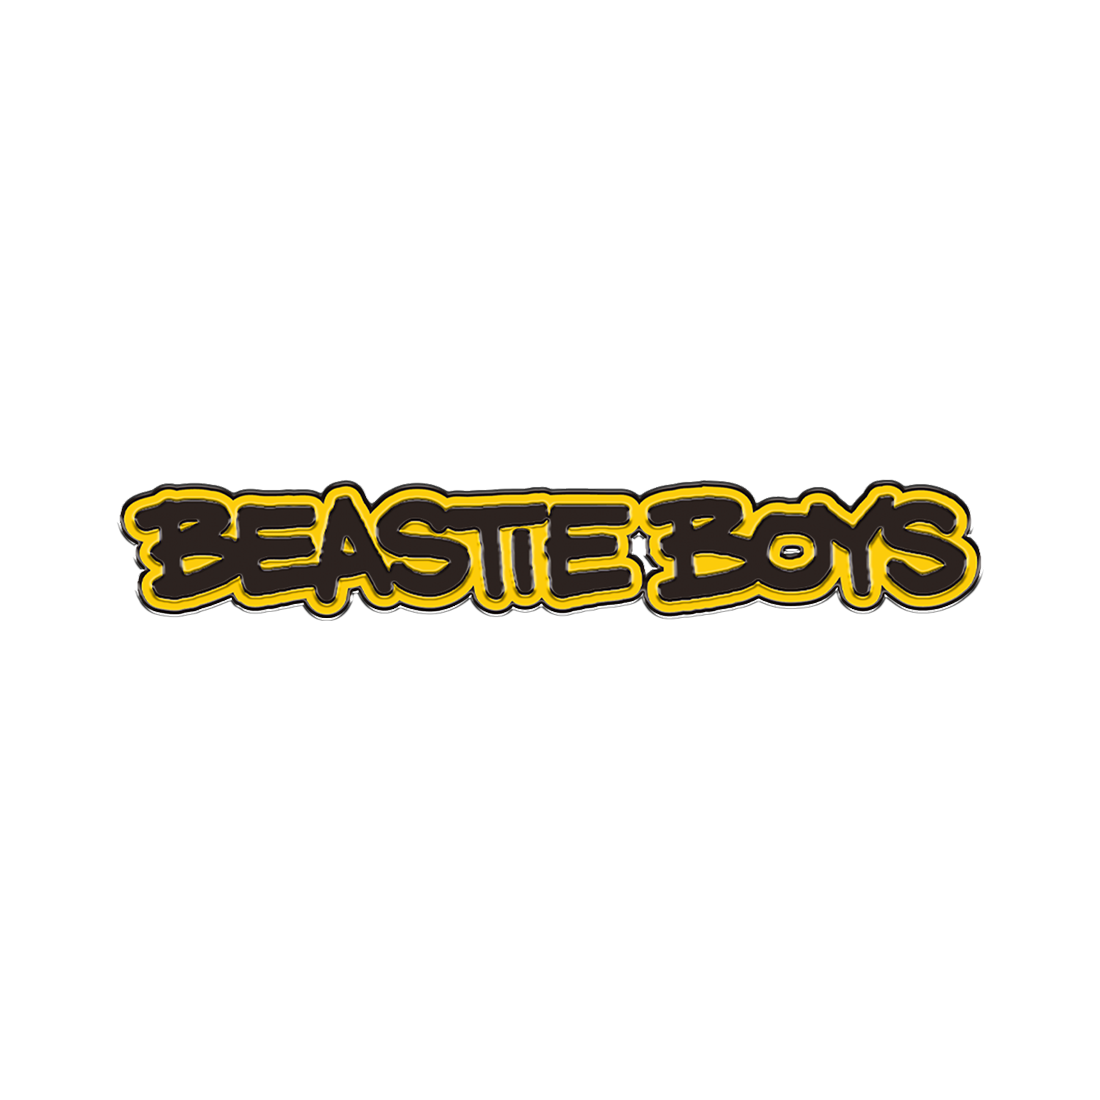 Beastie Boys - Beastie Boys Graffiti Pin